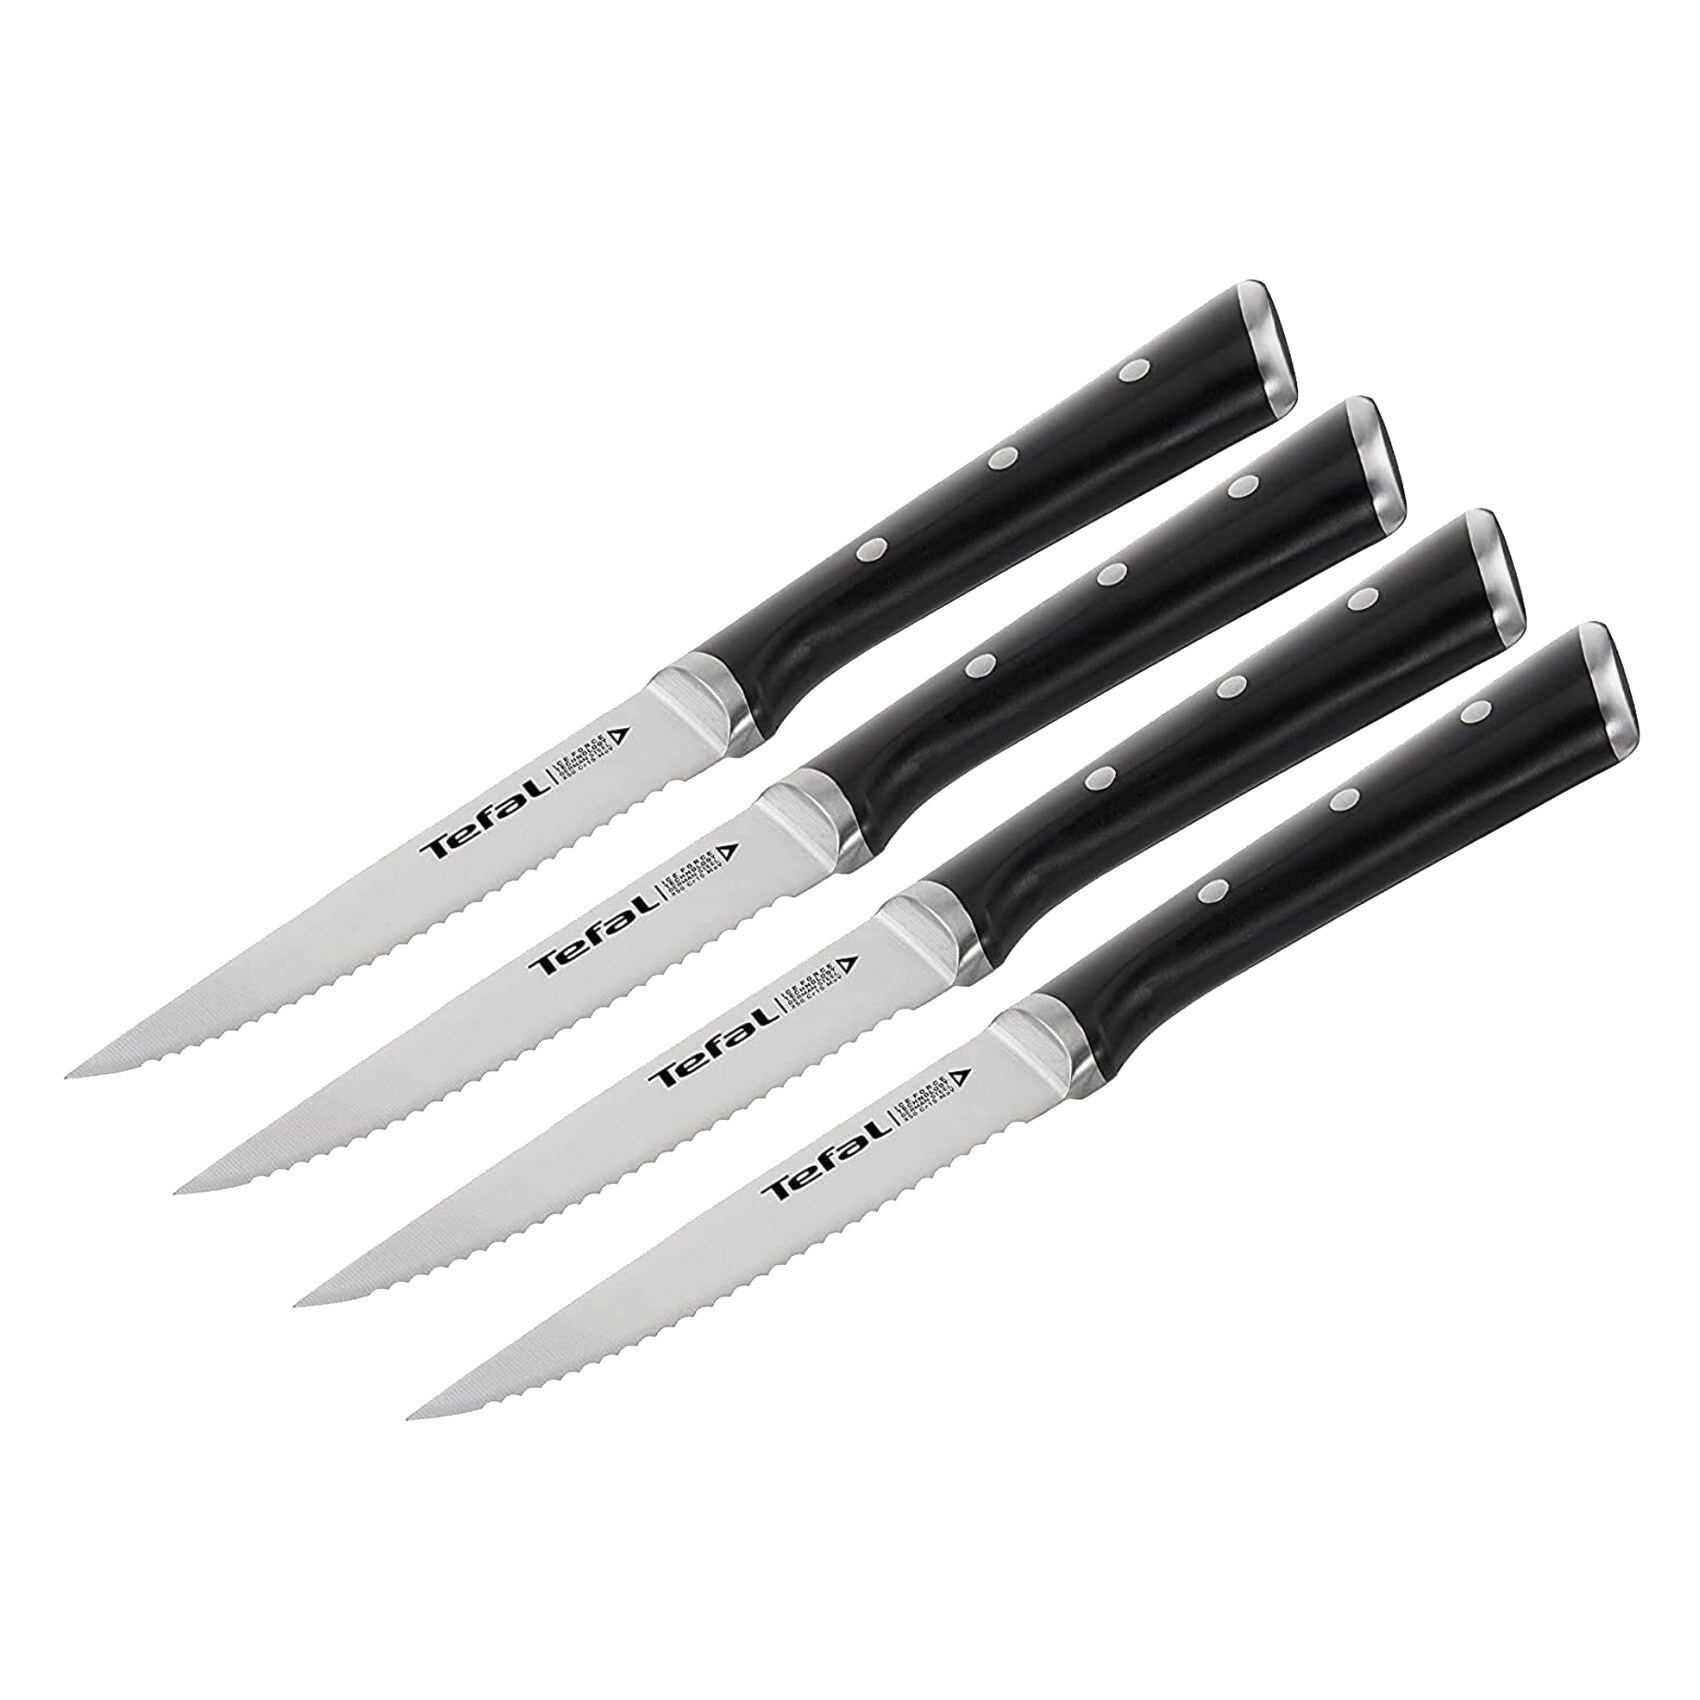 6 Pcs Aria Rosegold Knife Set with Block - Penguen Collection